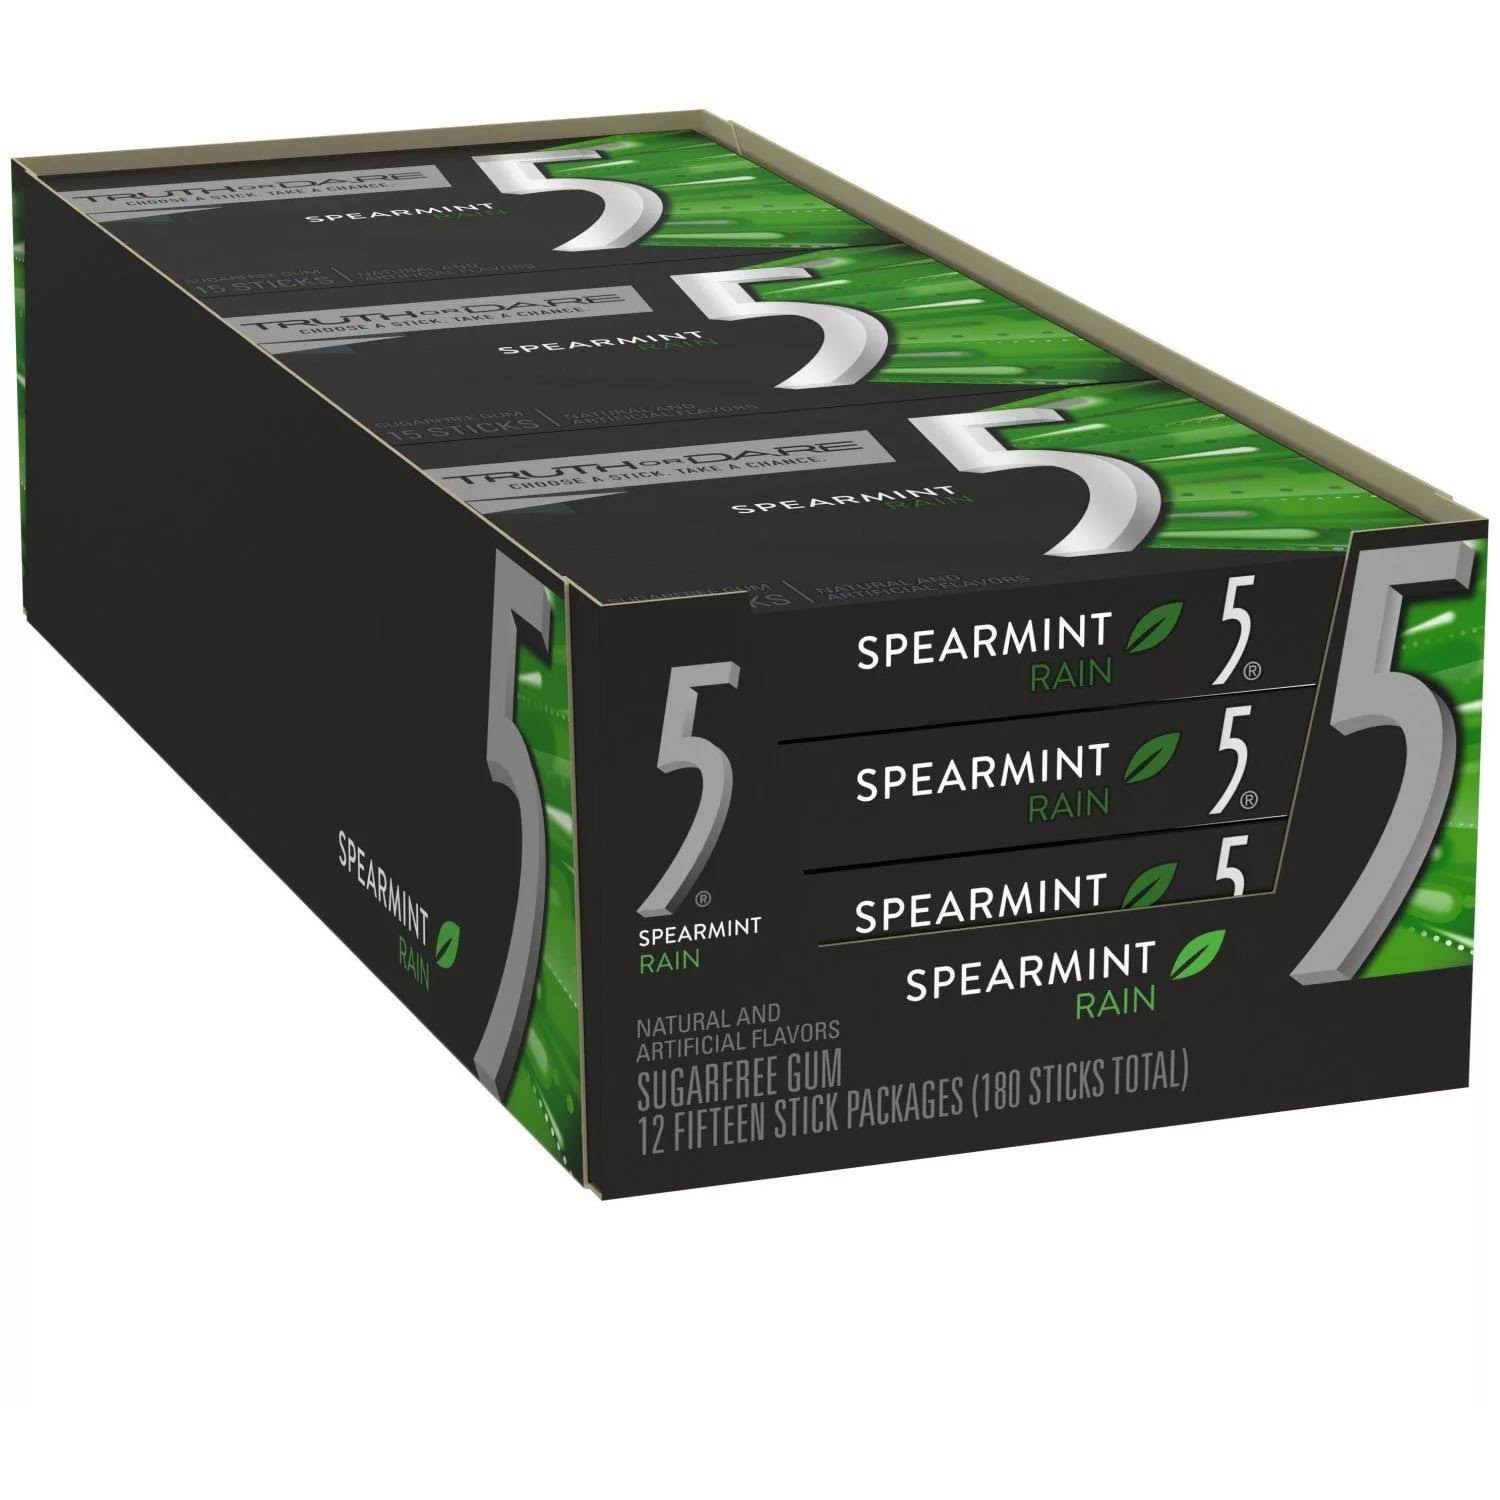 5 Gum Rain Sugar Free Spearmint Chewing Gum Box of 12 x 15 Stick Packs